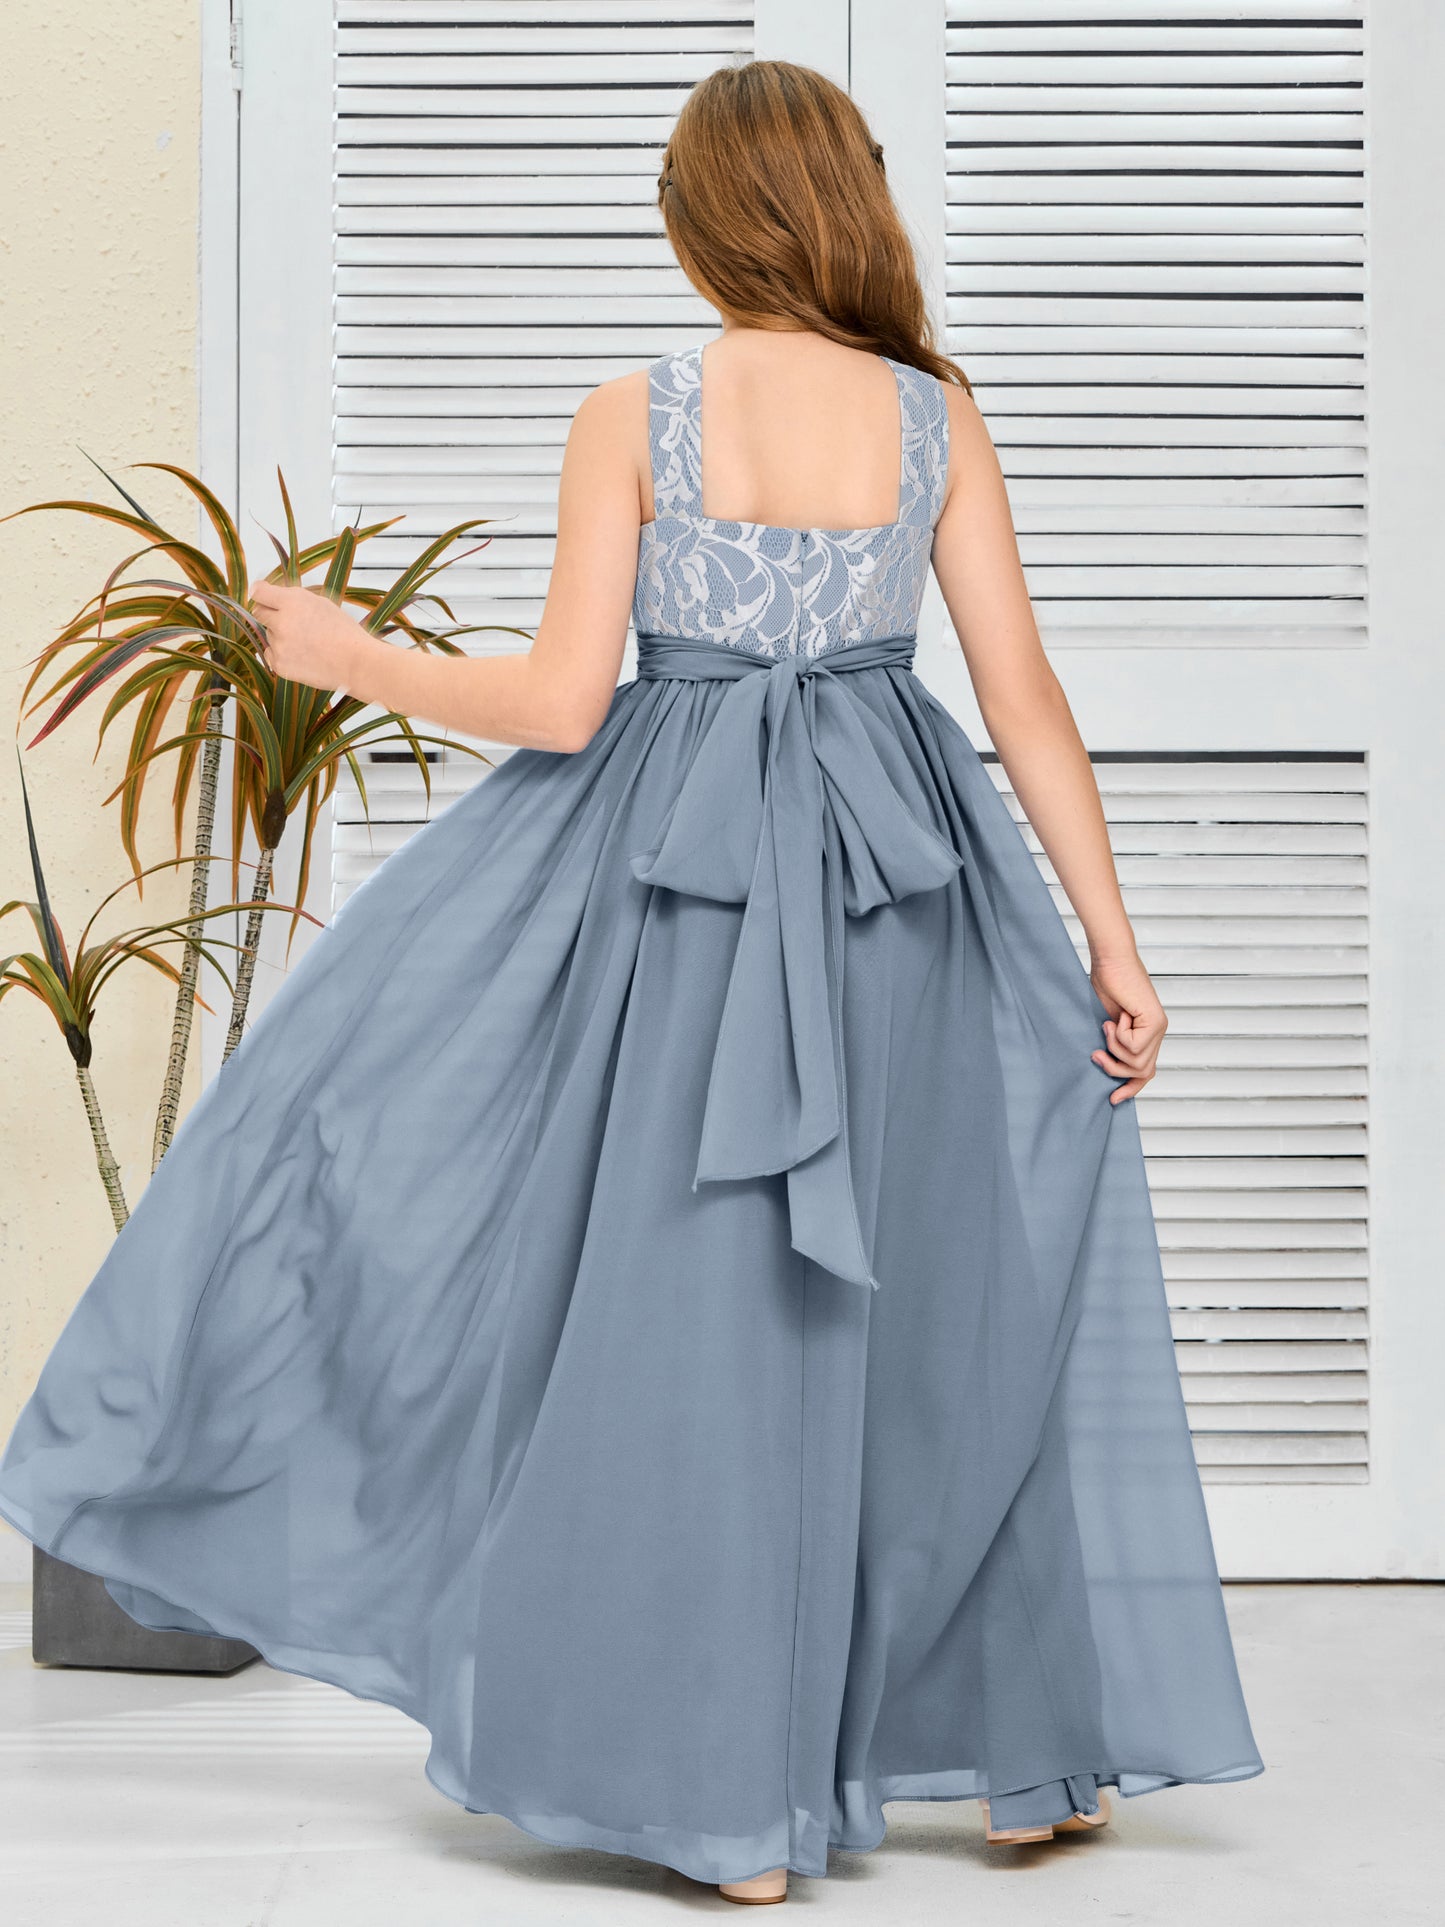 Sleeveless A Line Chiffon Lace Junior Bridesmaid Dress